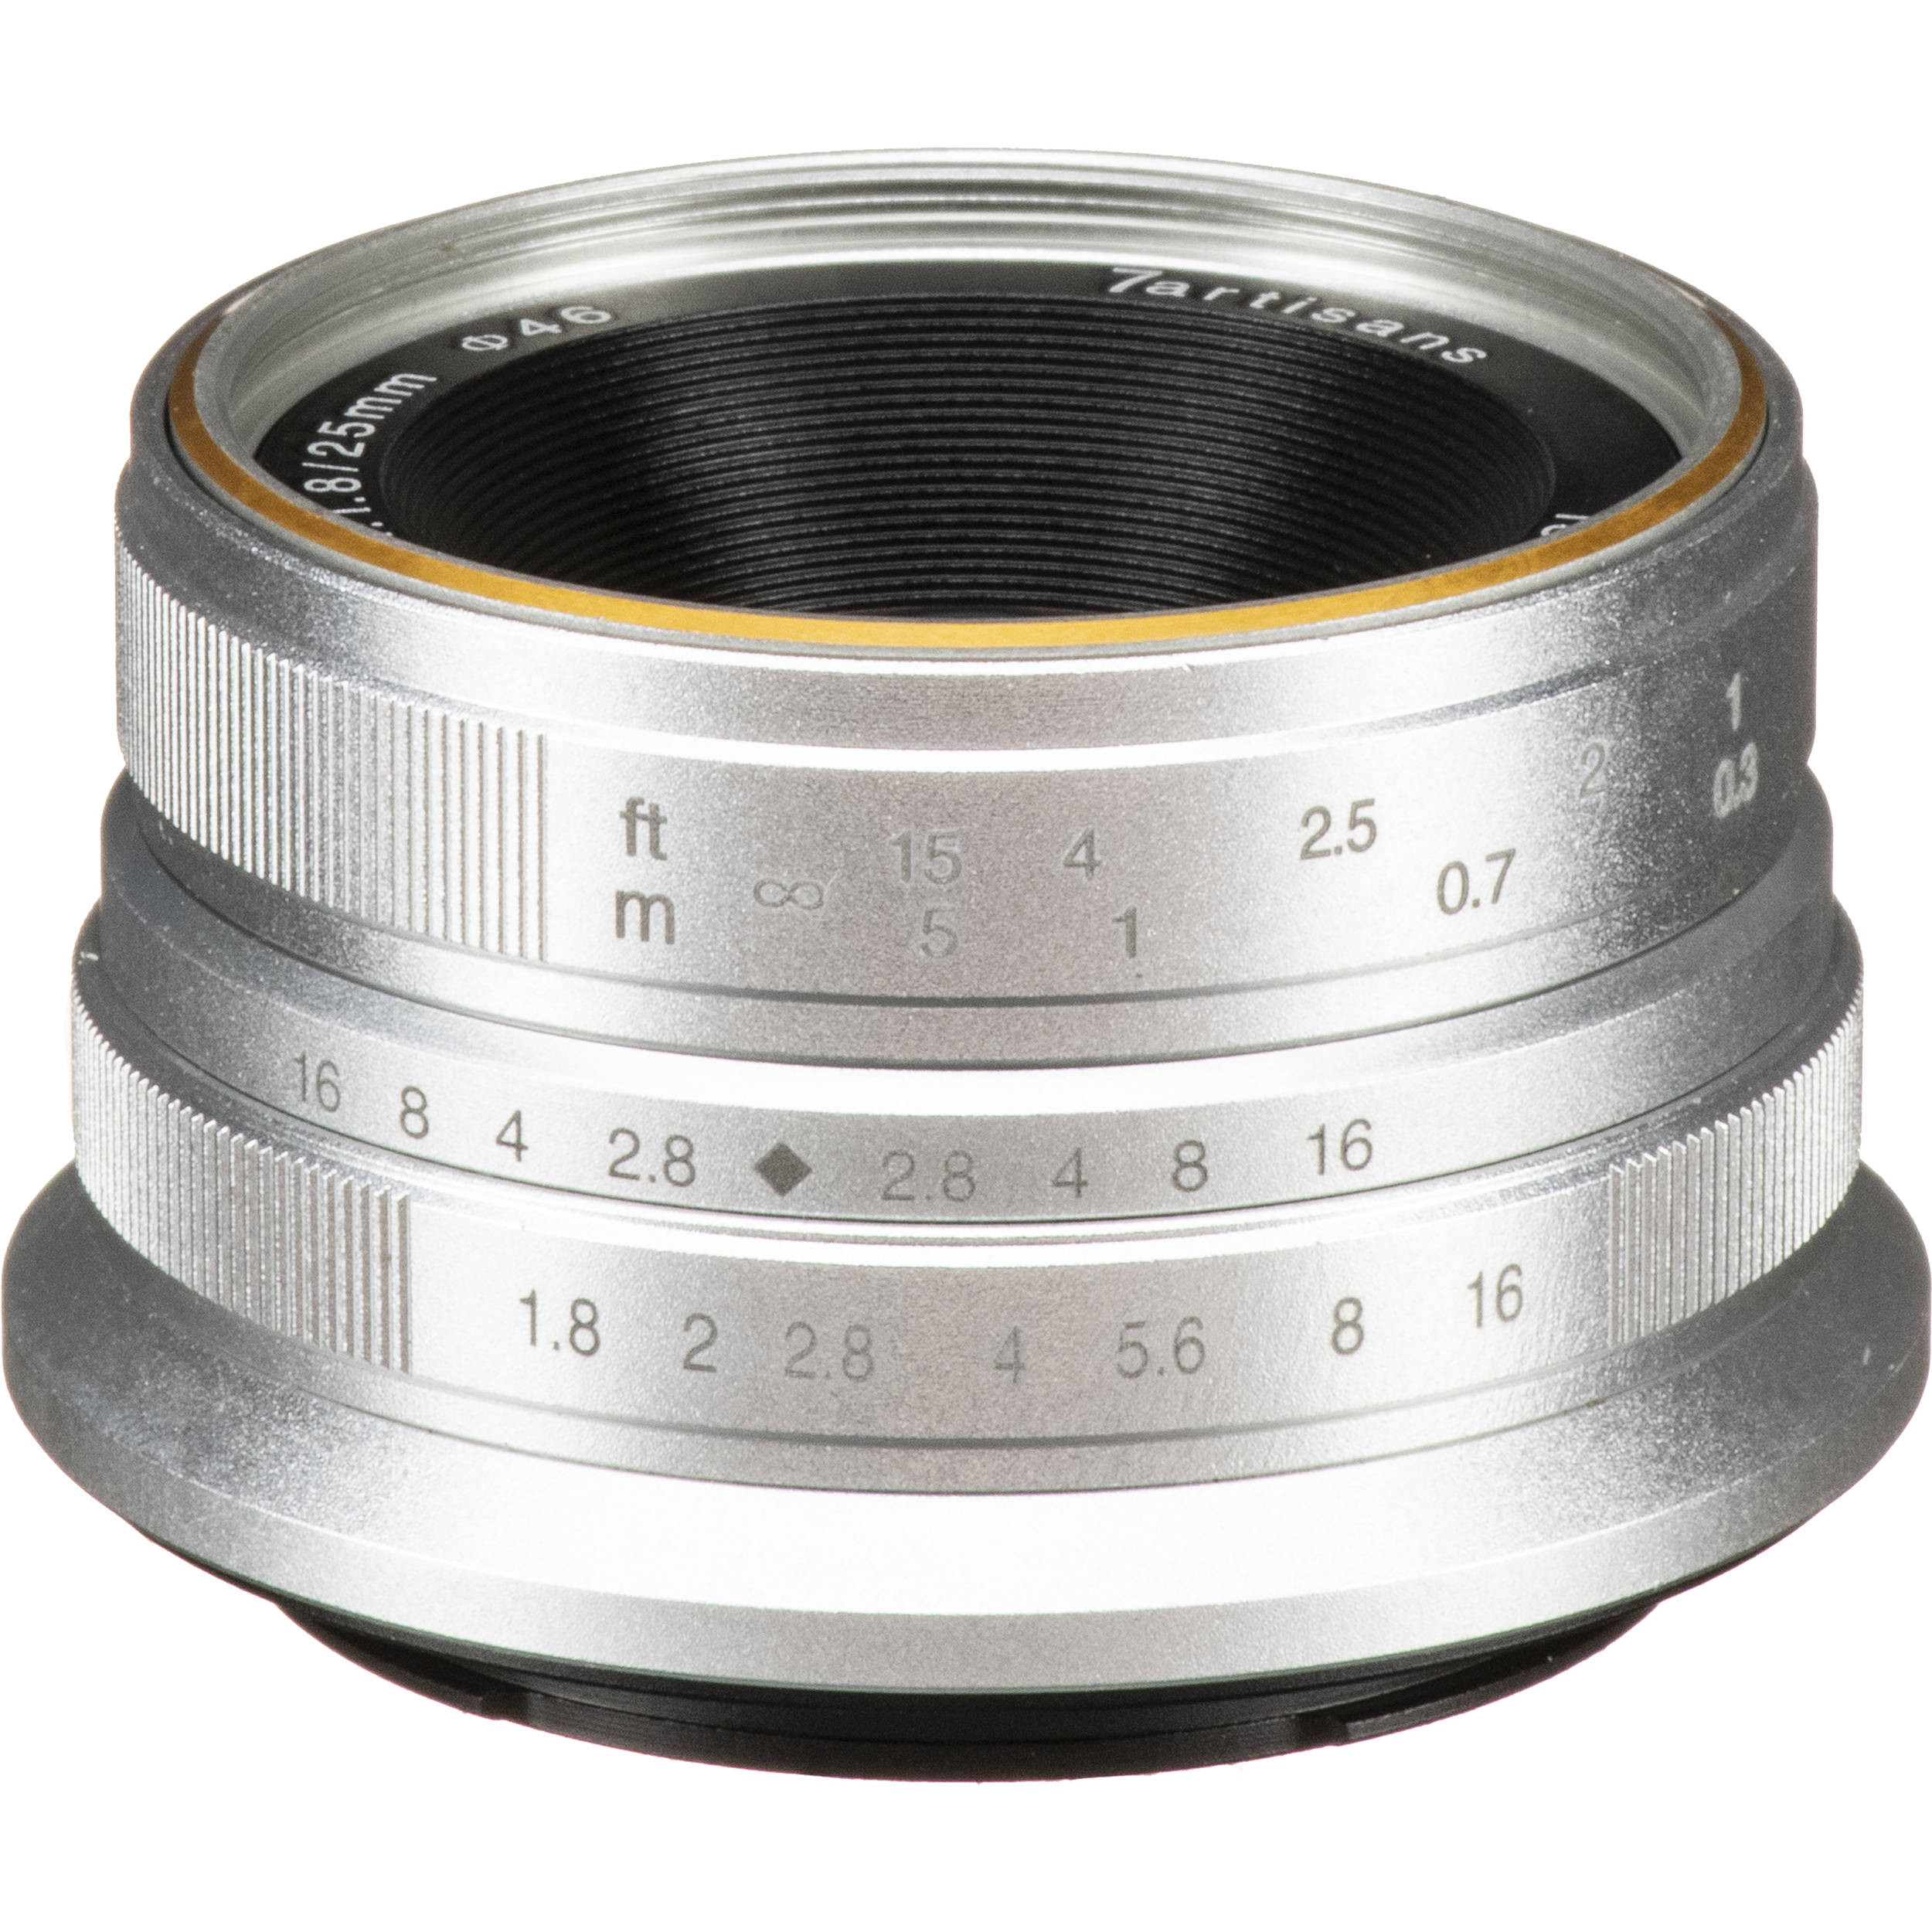 7Artisans 25mm f/1.8 Manual Focus Lens Silver (M4/3 Mount)